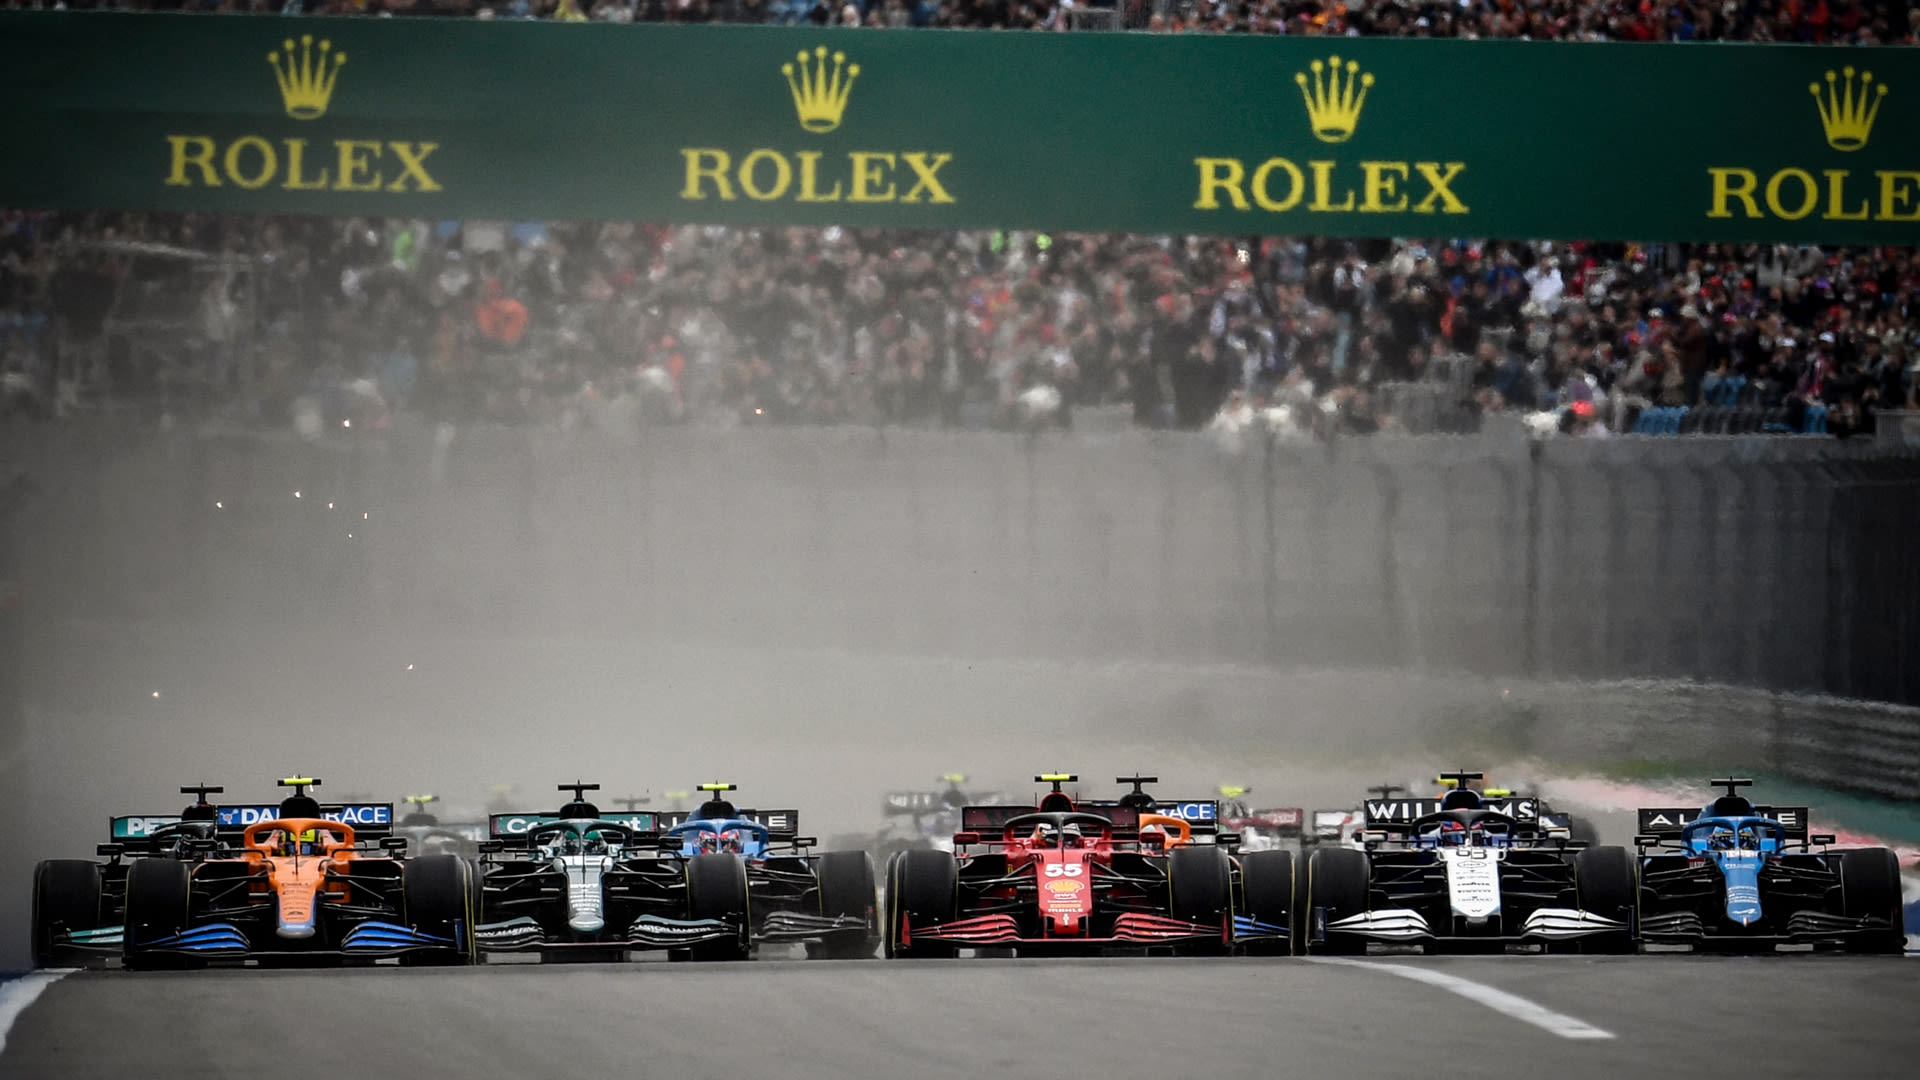 2022 F1 Grand start times confirmed | Formula 1®